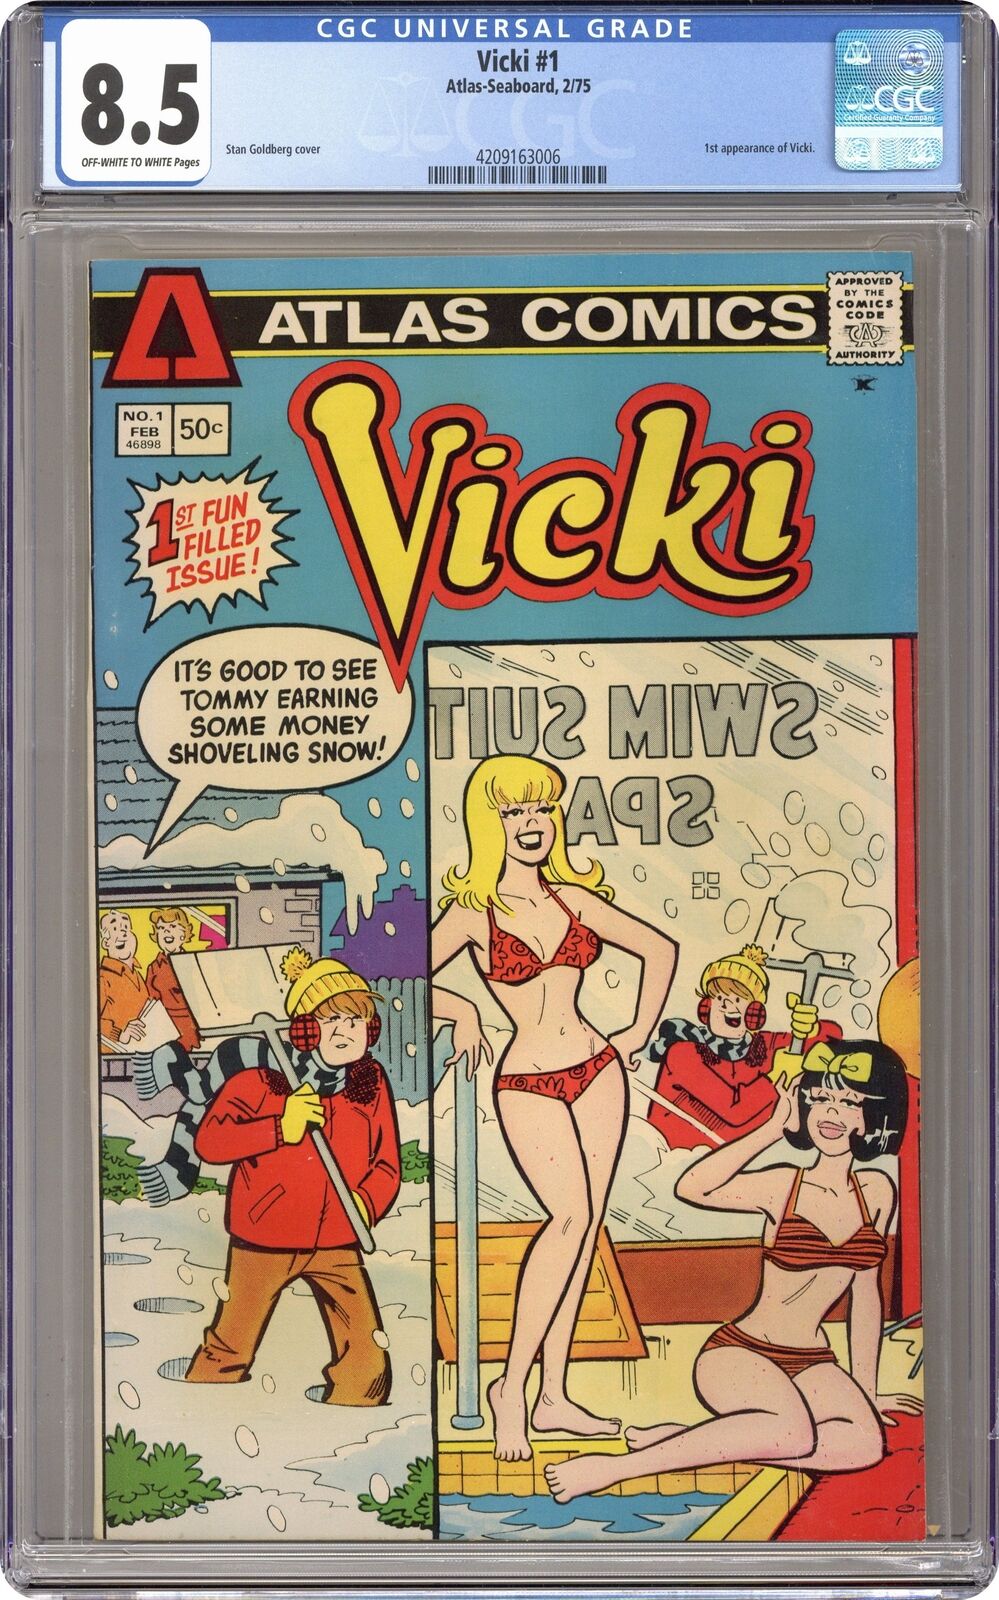 Vicki #1 CGC 8.5 1975 4209163006